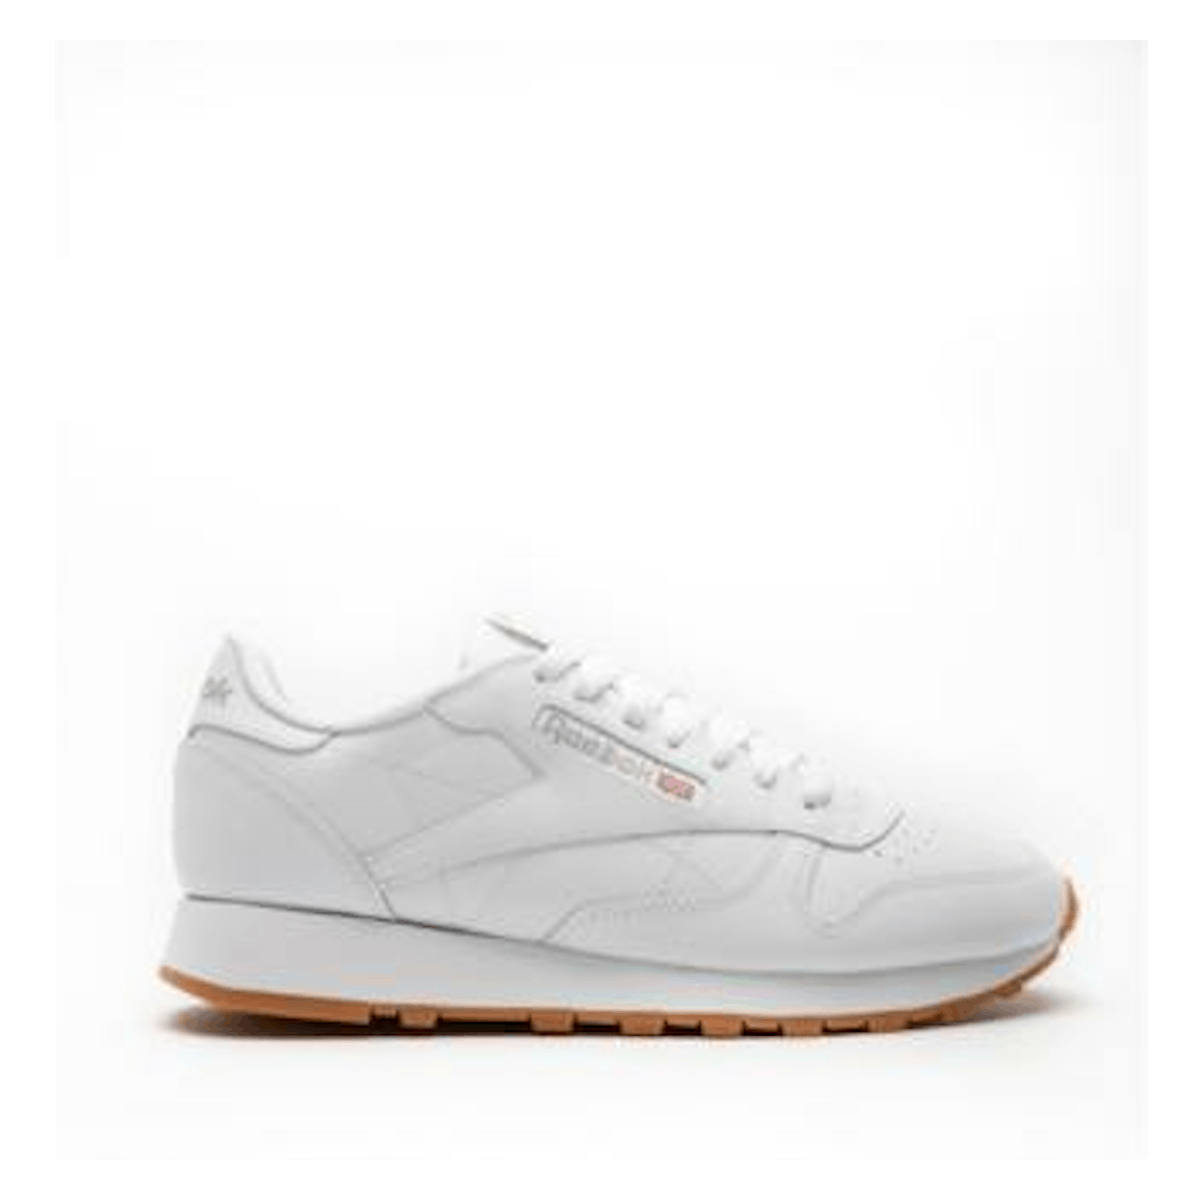 Reebok Classic Leather Footwear White Gum